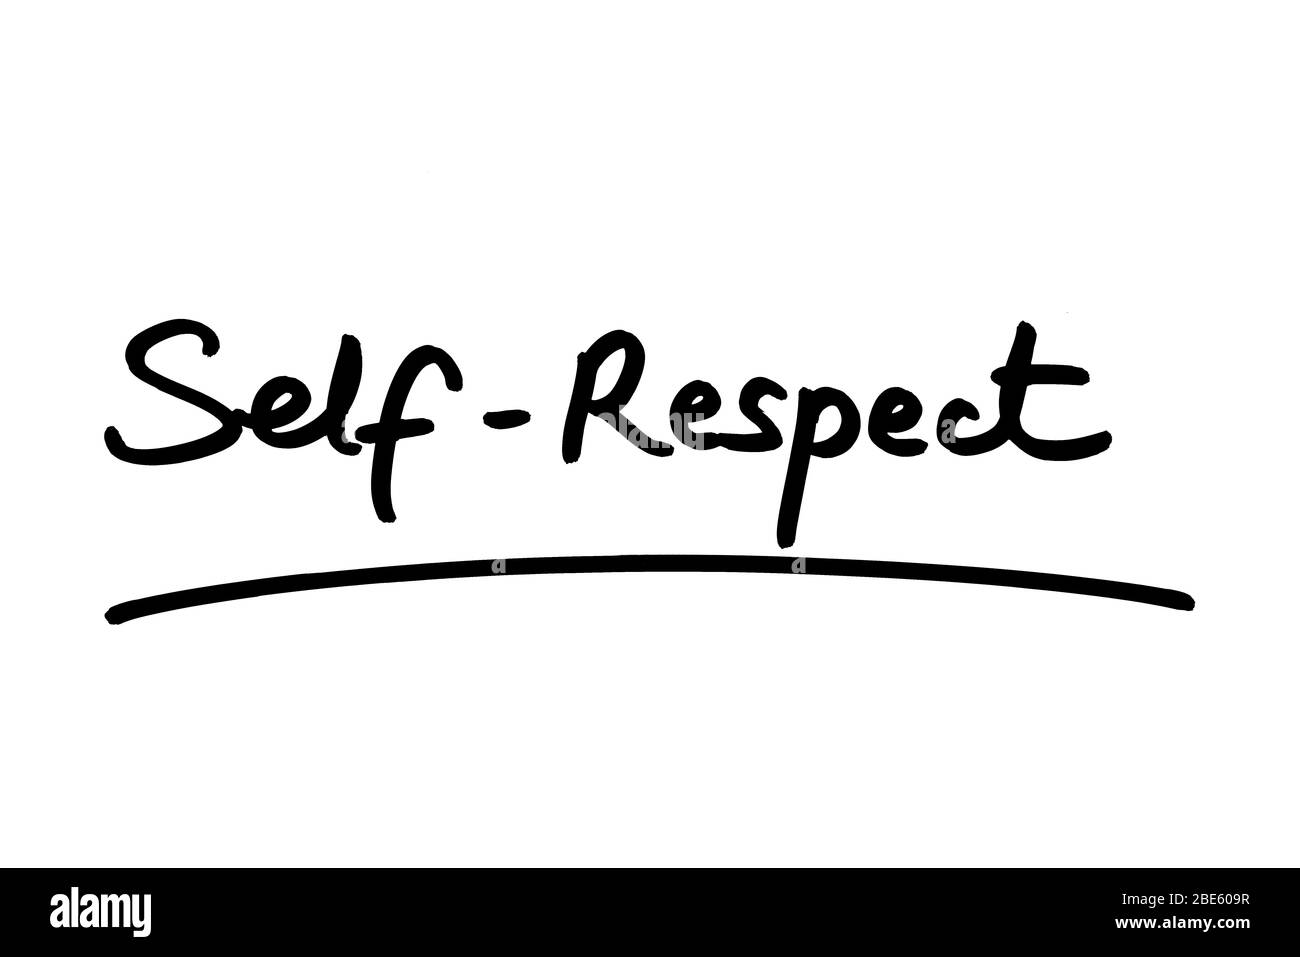 Self-Respect handwritten on a white background Stock Photo - Alamy